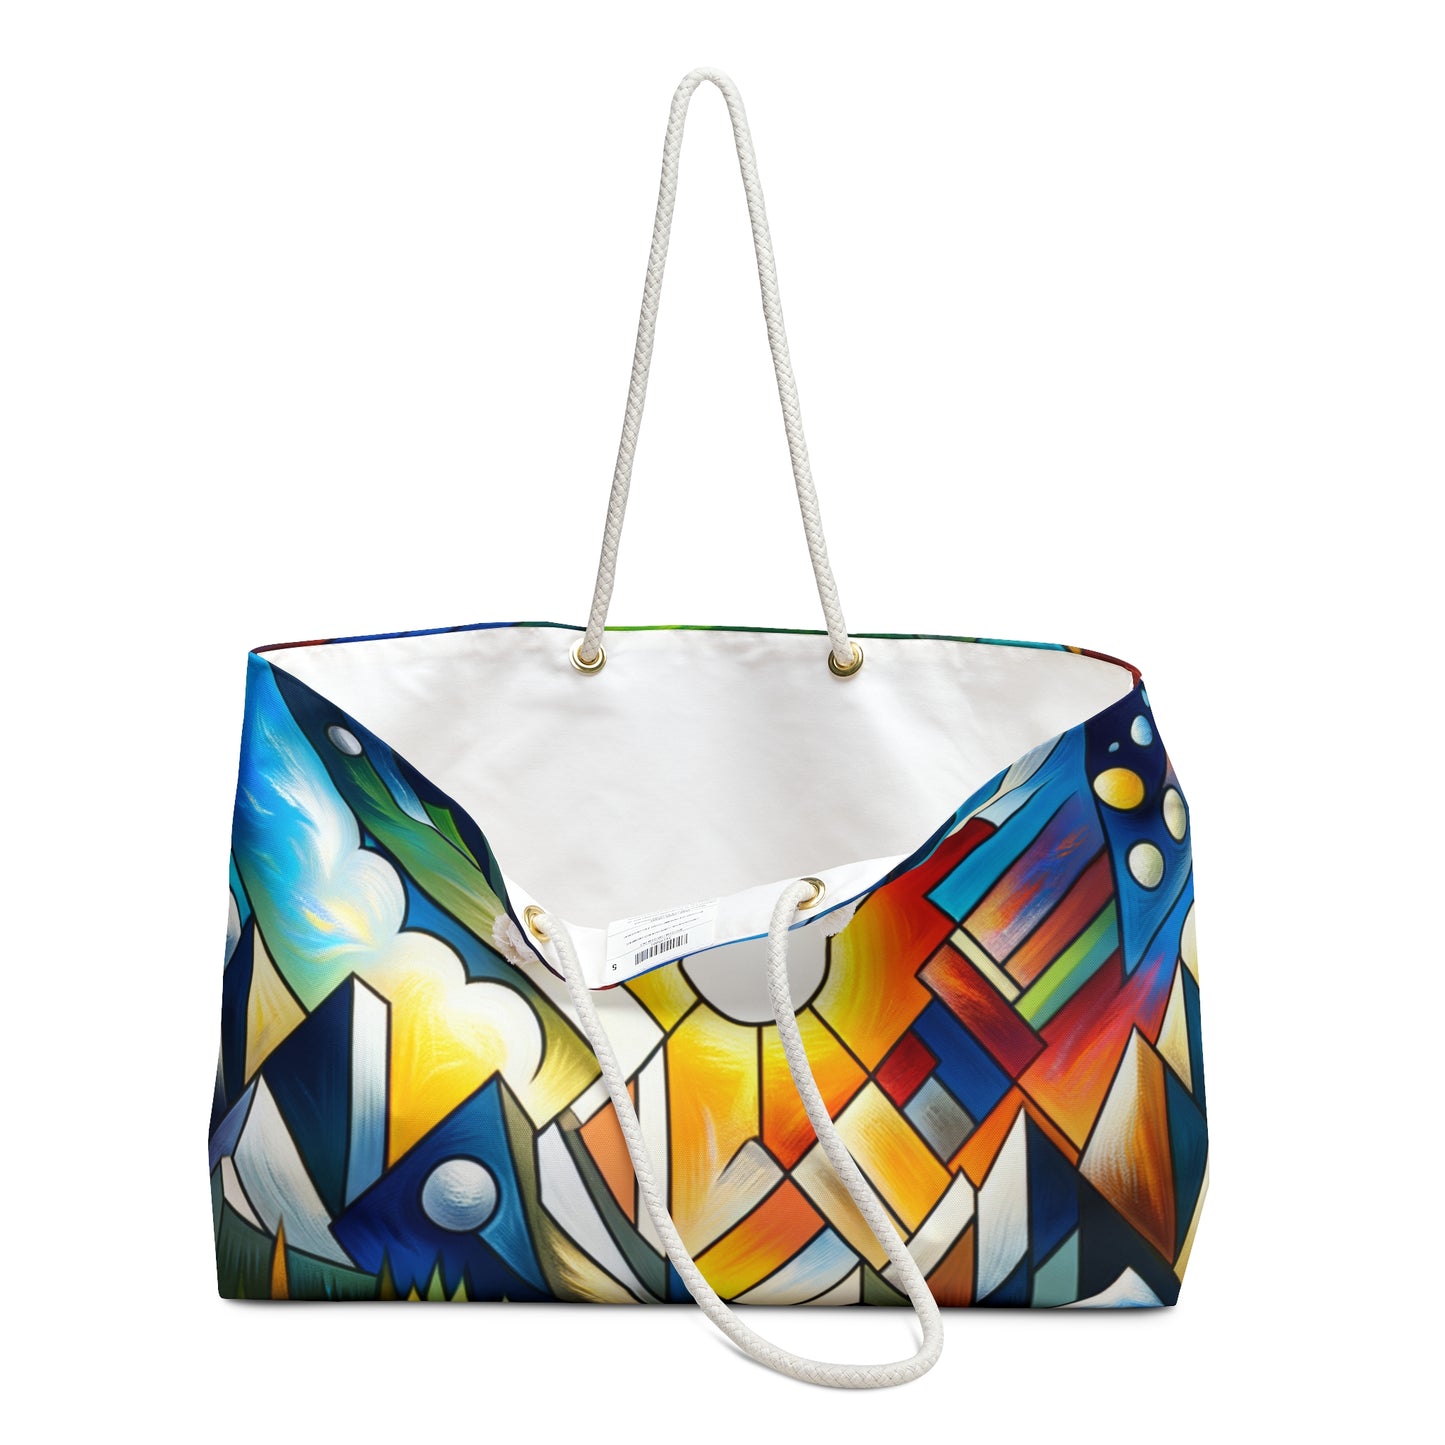 "Cubic Naturalism" - The Alien Weekender Bag Cubism Style